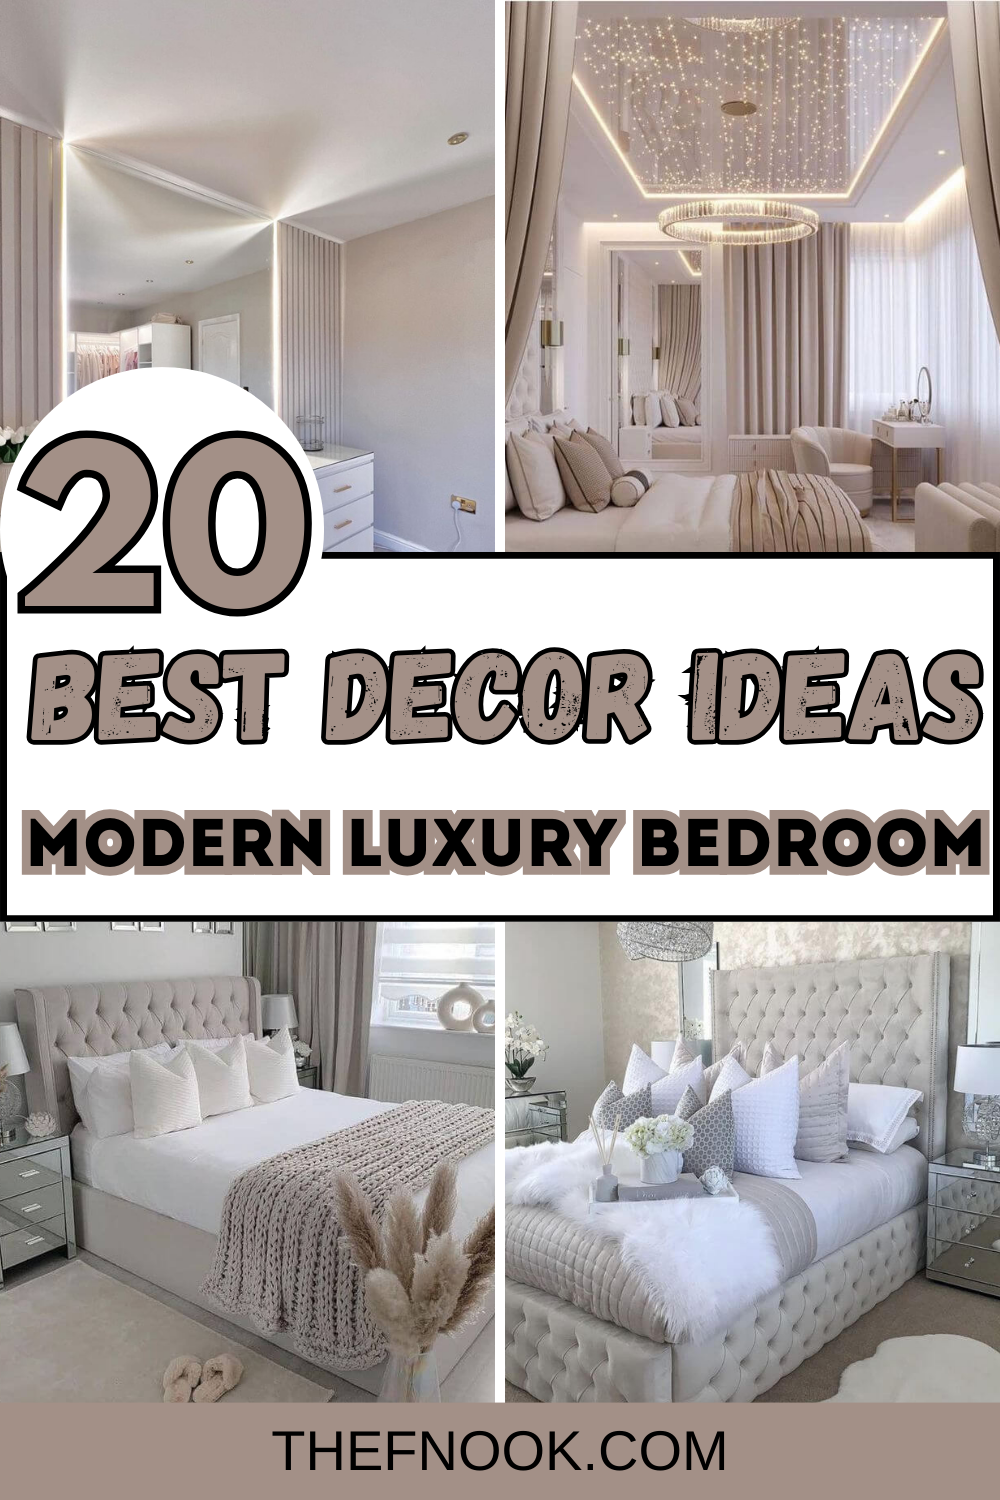 20 Best Decor Ideas for a Modern Luxury Bedroom